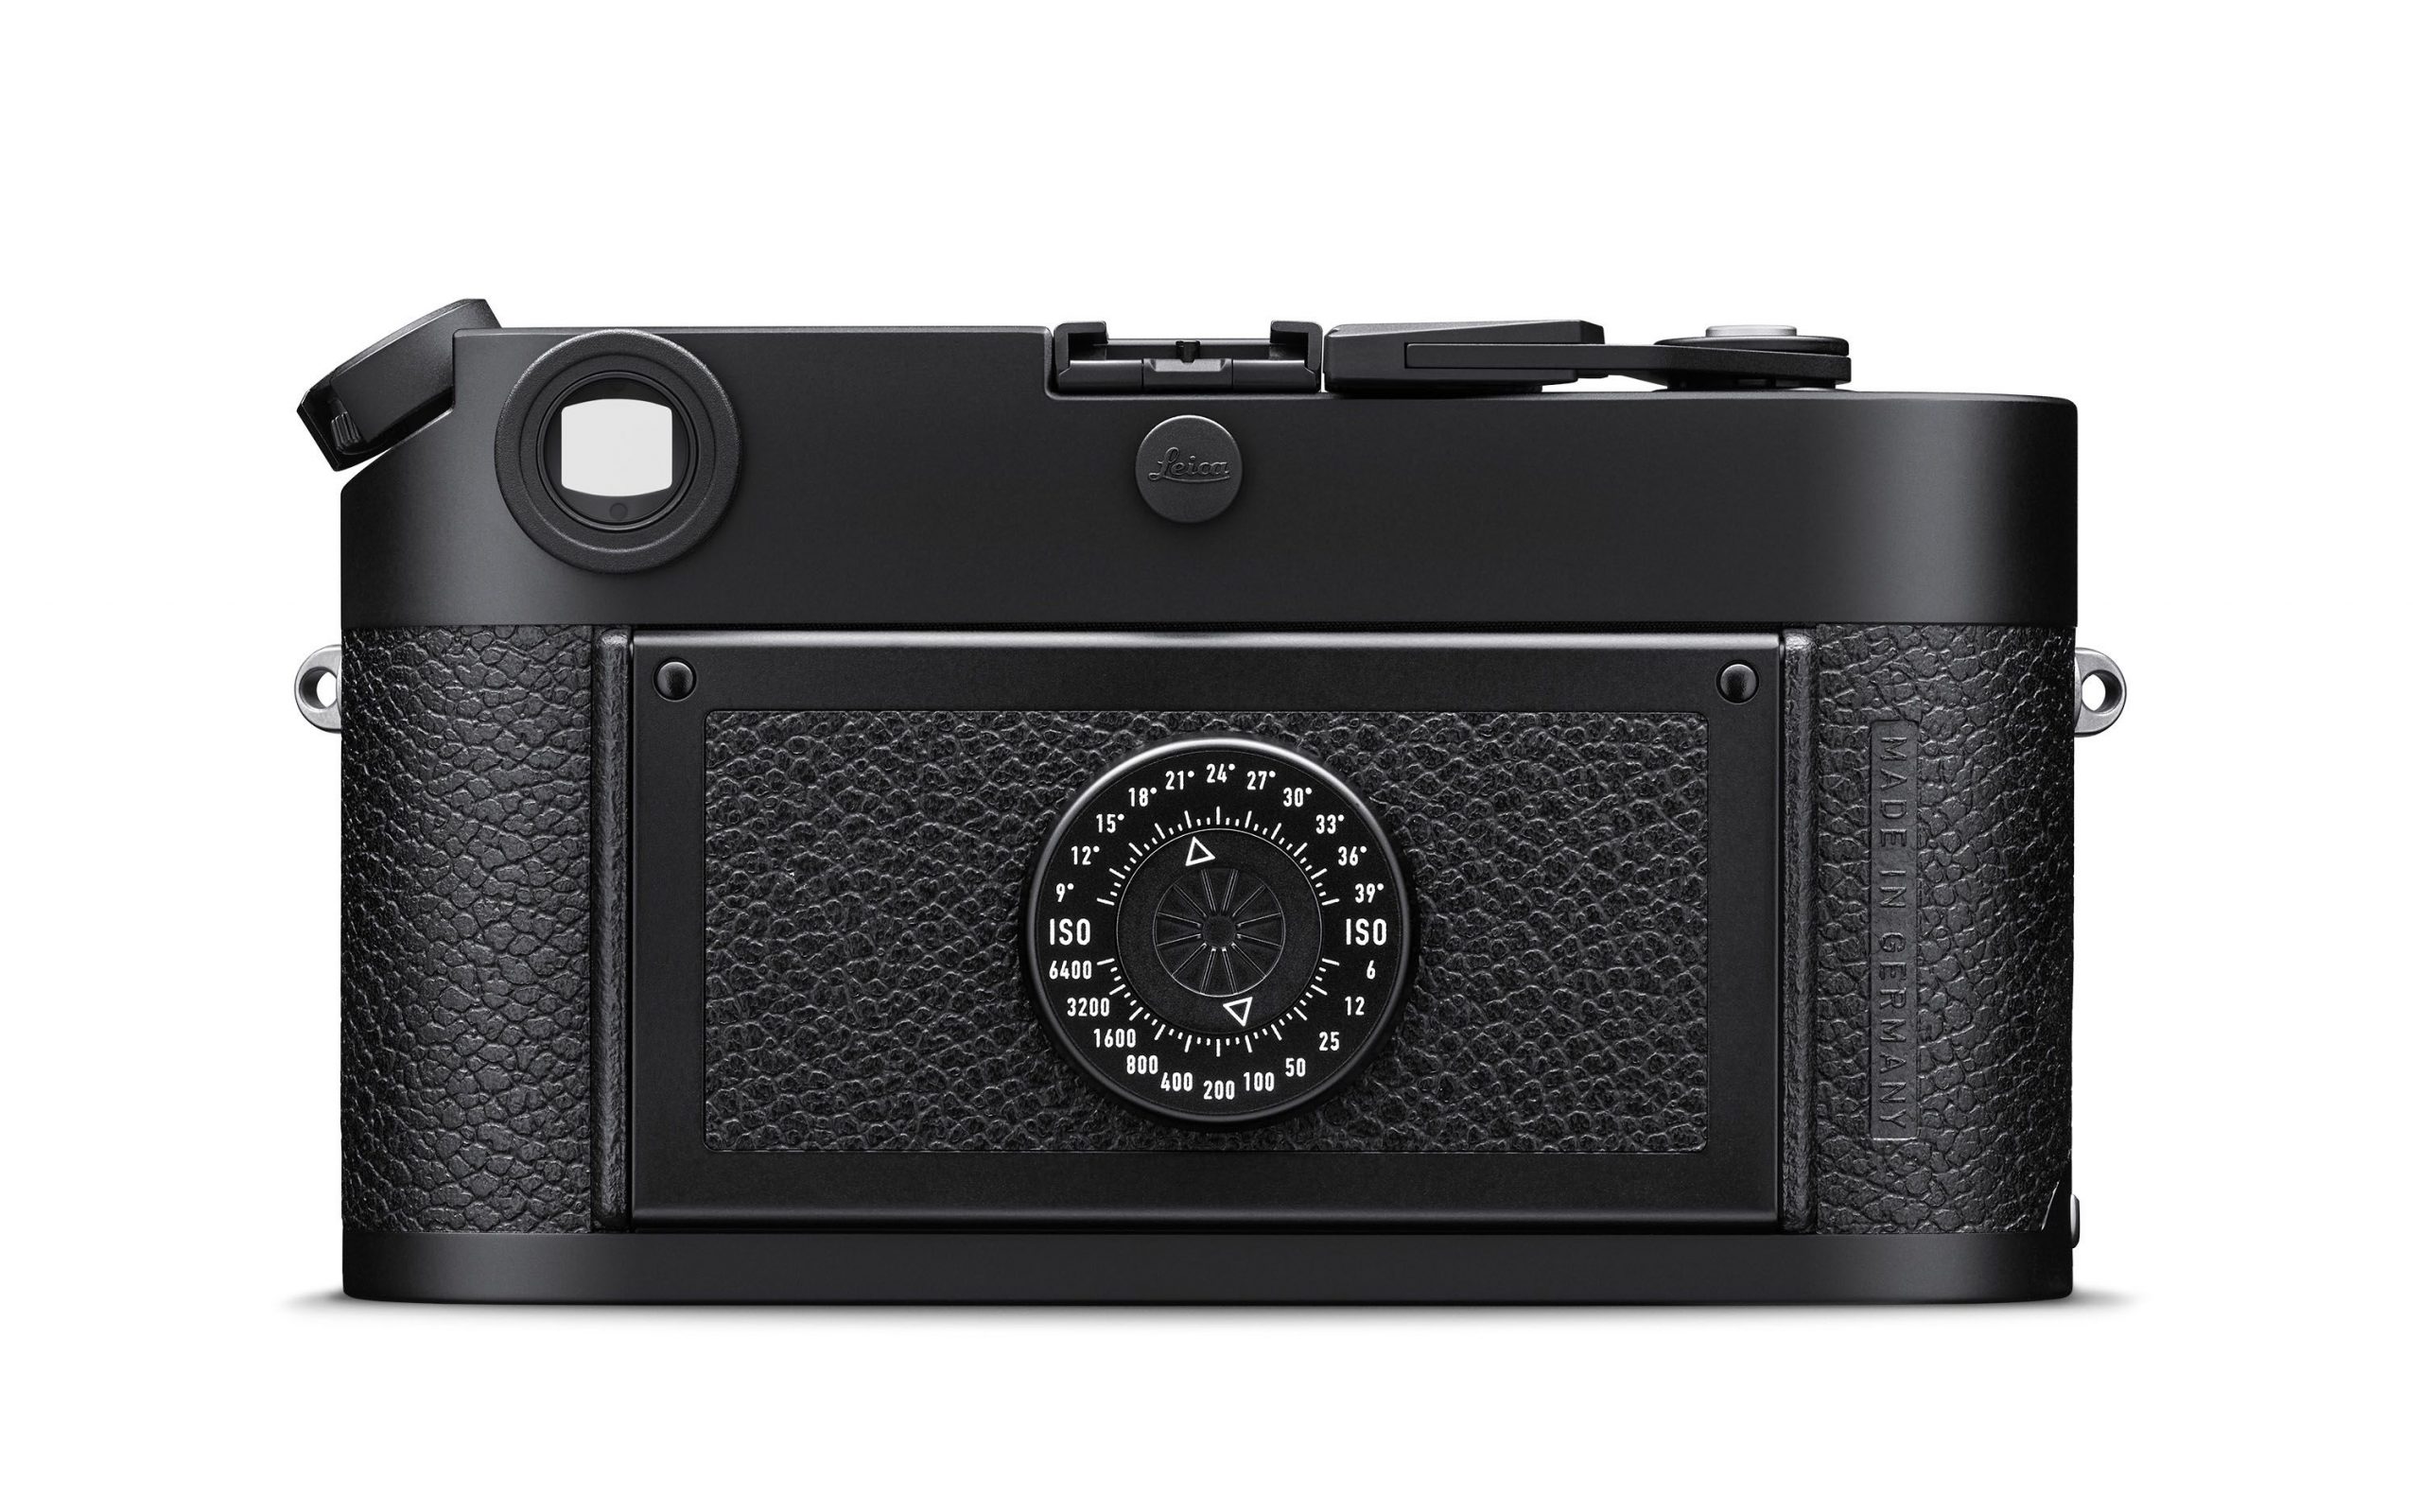 Leica M10-P 24 MP Digital SLR Camera - Chrome Black for sale online